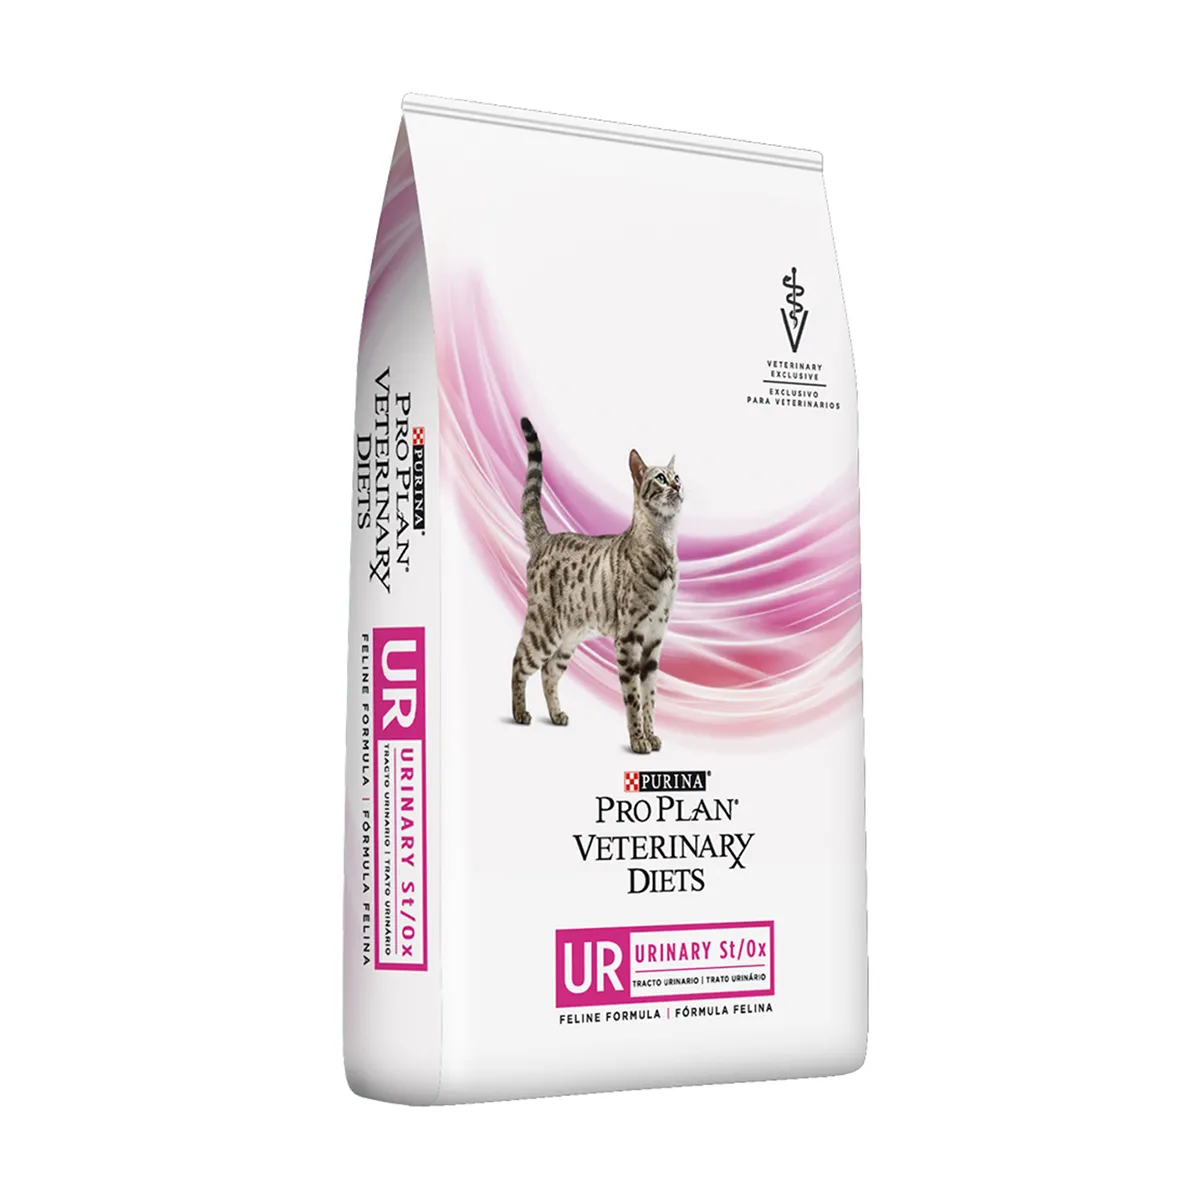 Veterinary-Diets-UR-Urinario-ST-OX-Feline-03